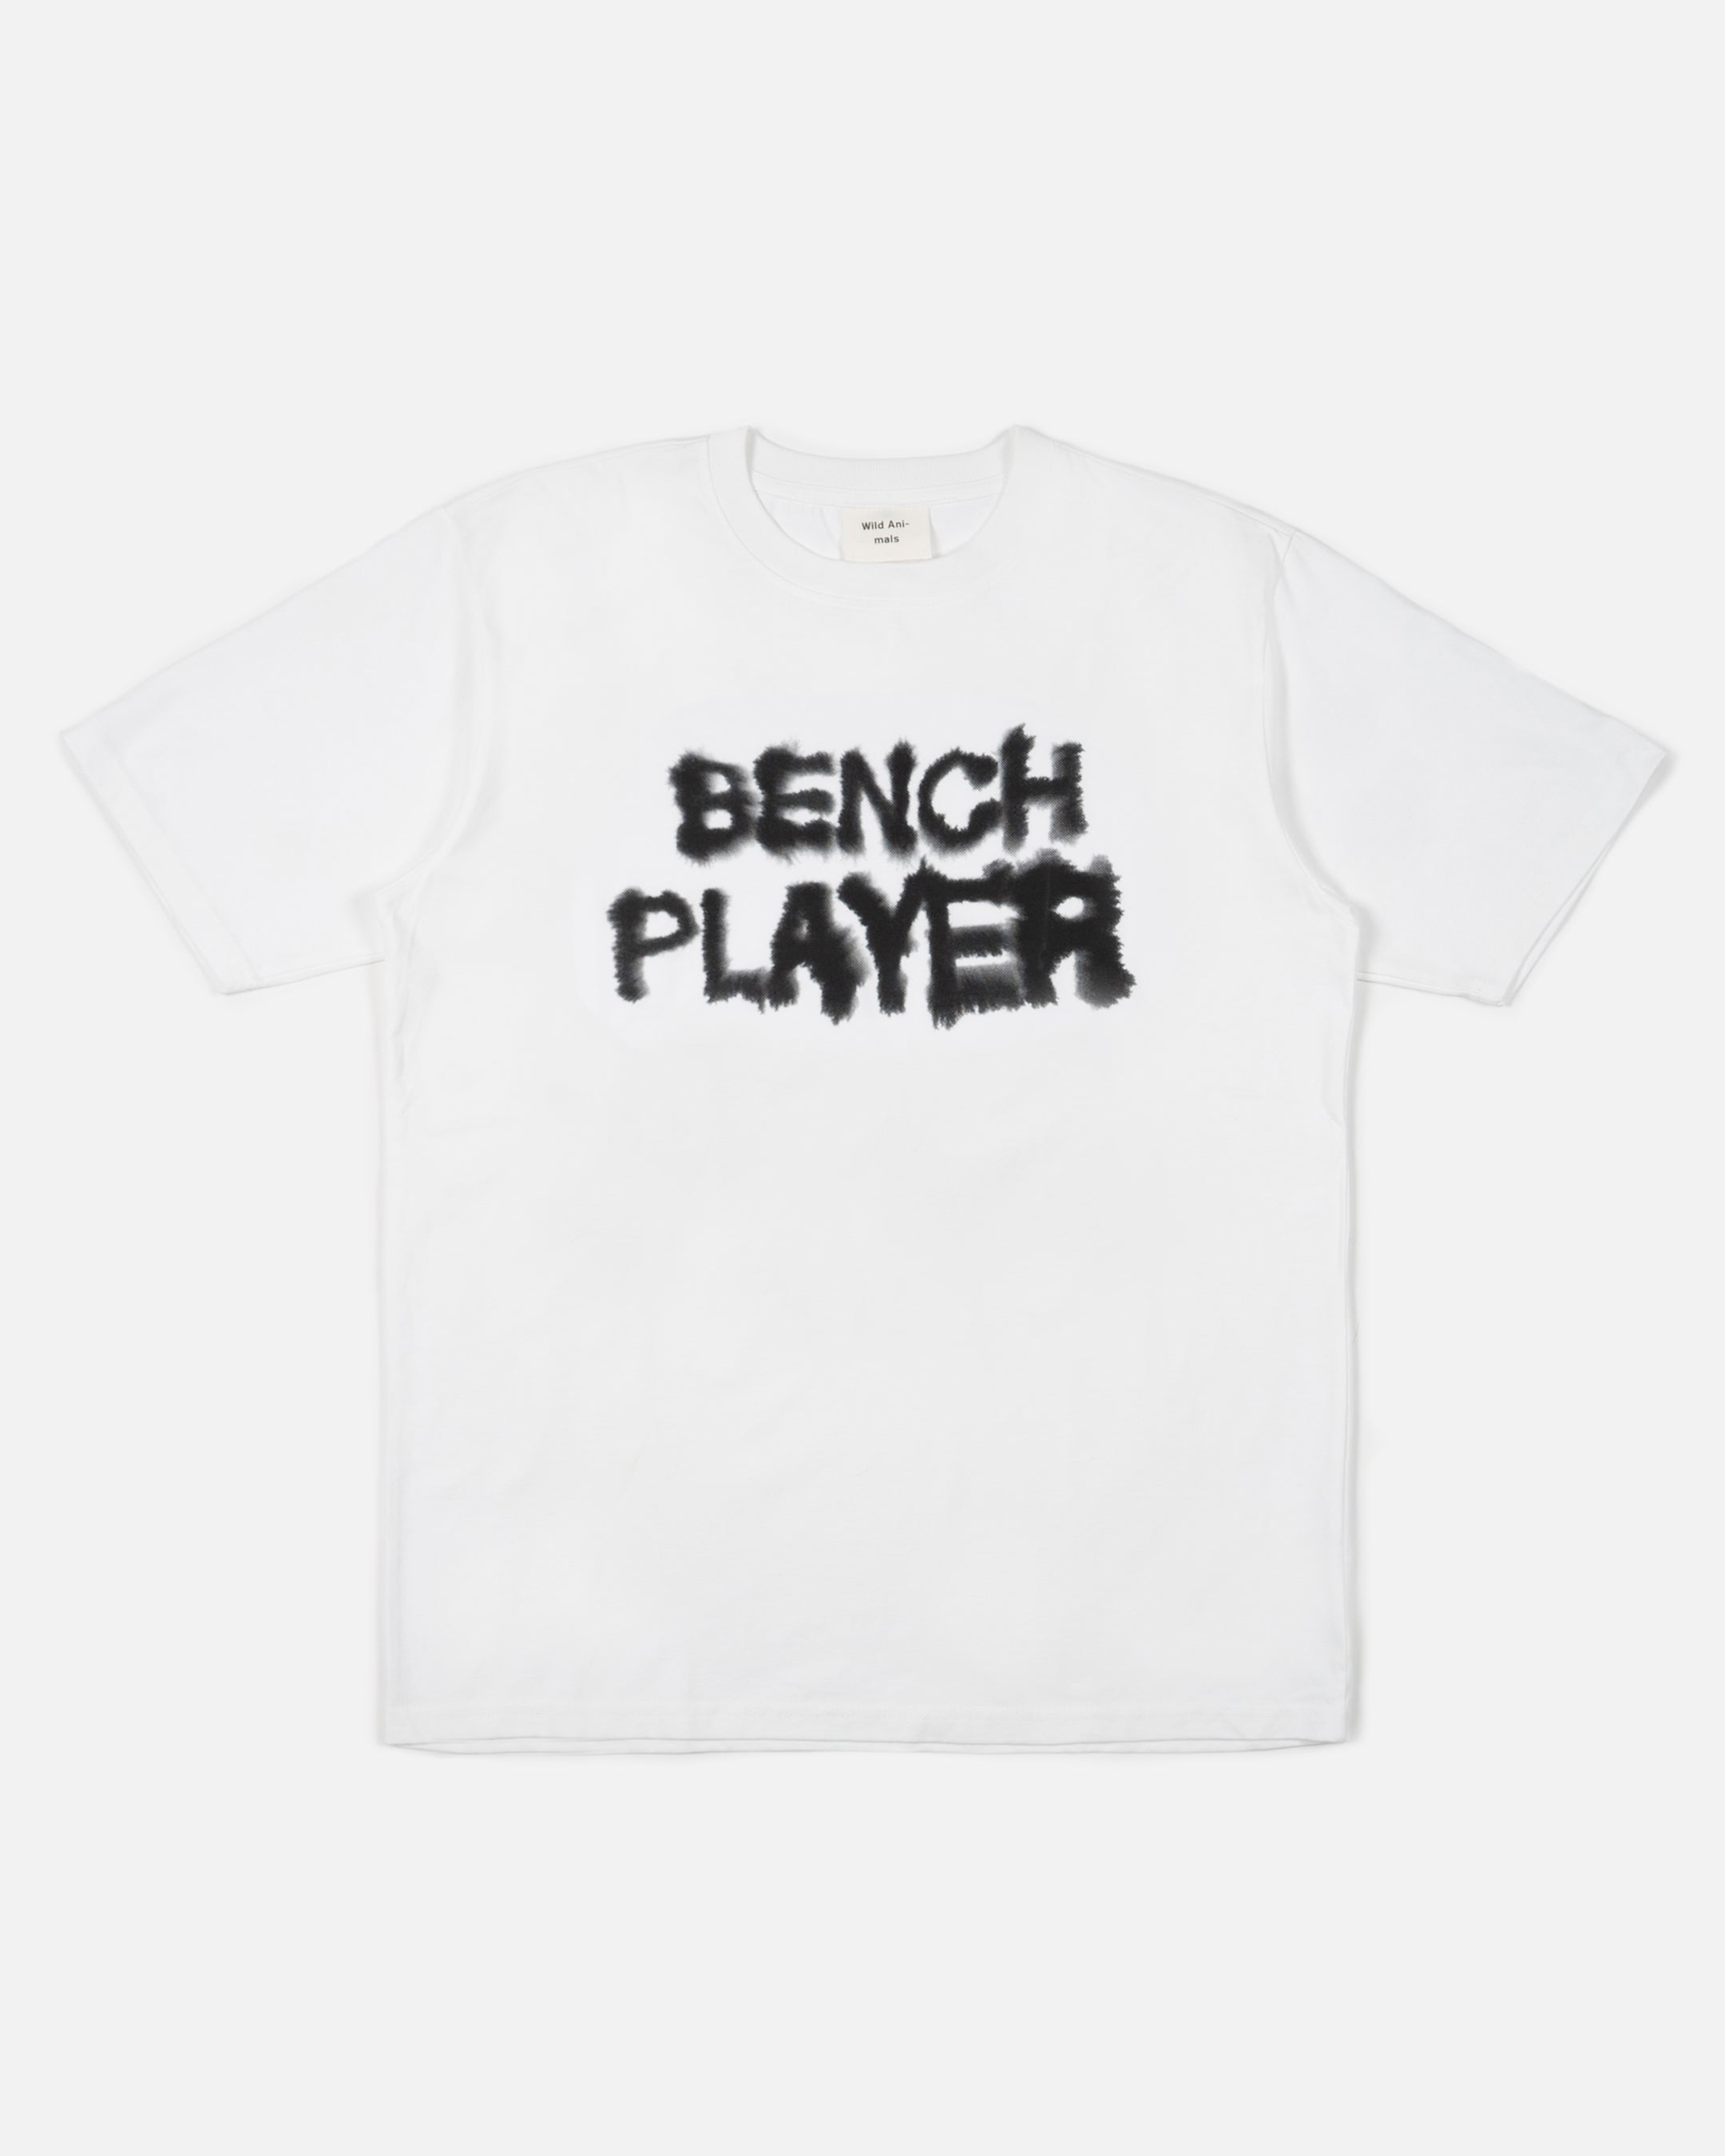 Helvetica van Wild Bench Player Mierlo T-Shirt by Rop Animals –